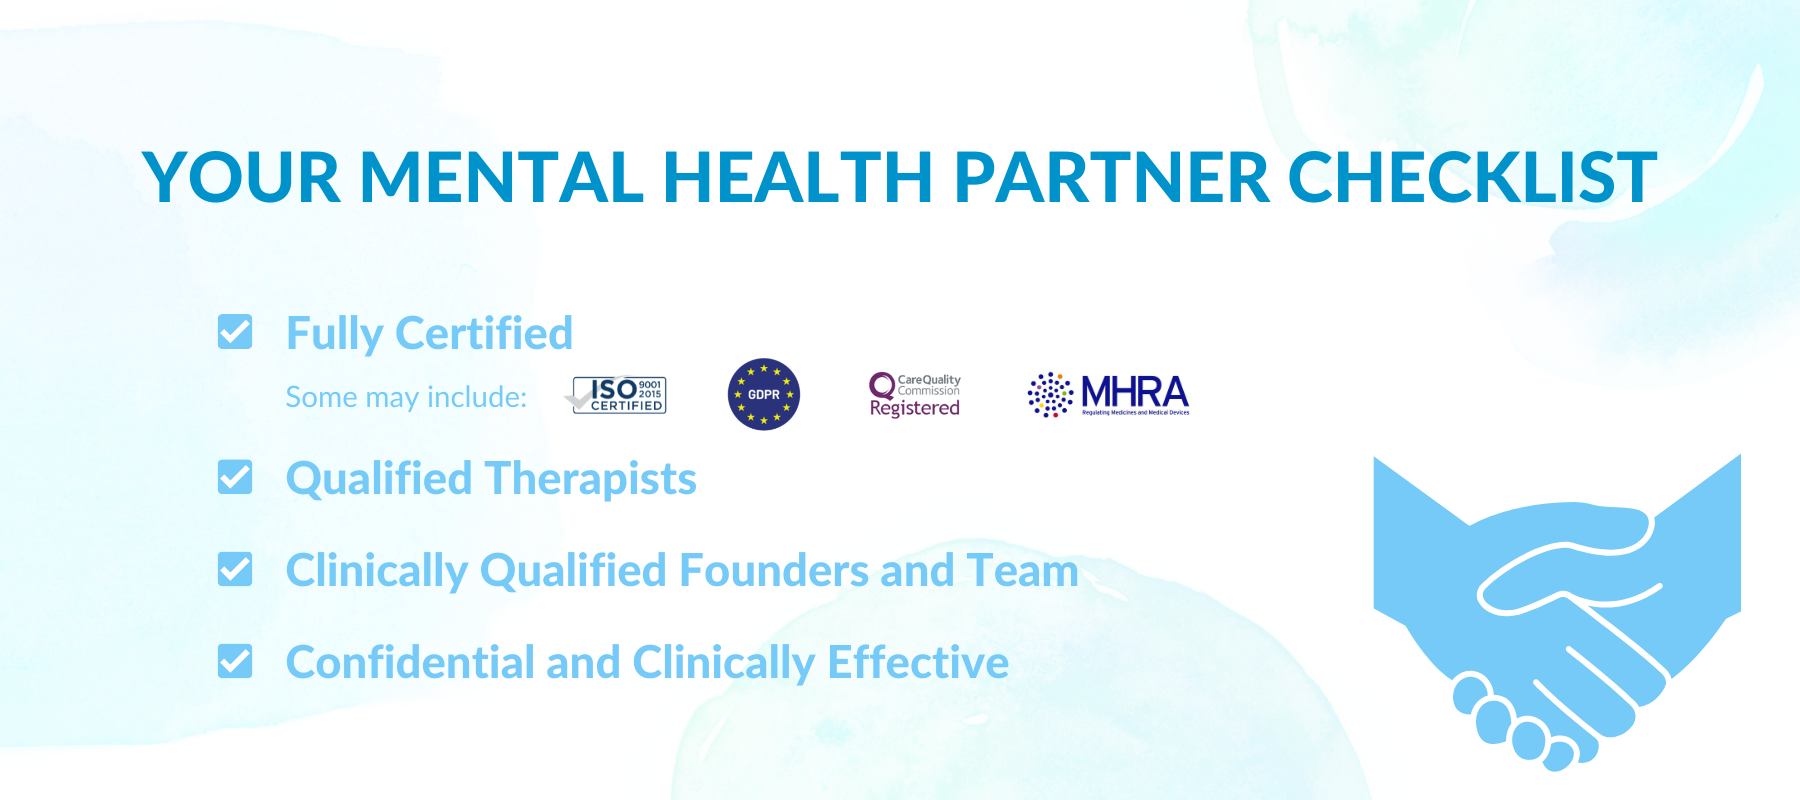 Your Mental Health Partner Checklist